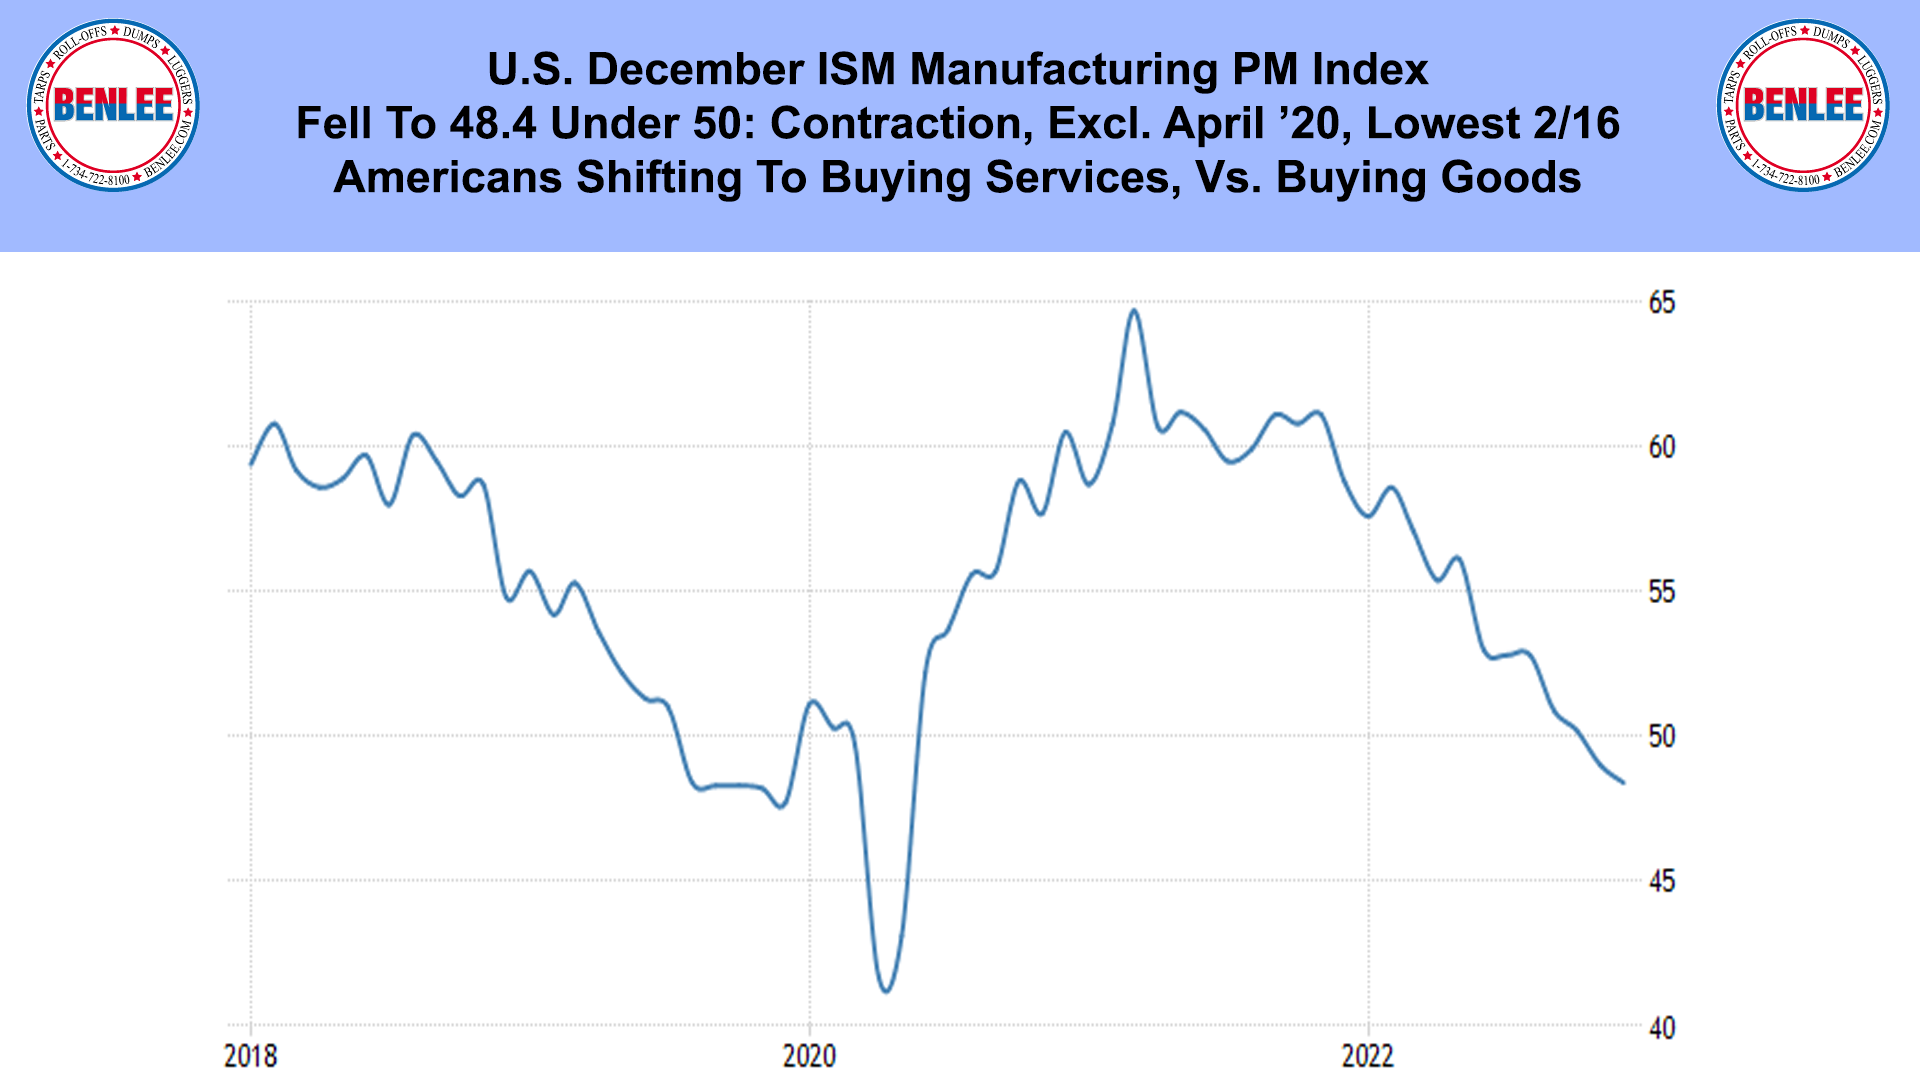 U.S. December ISM Manufacturing PM Index